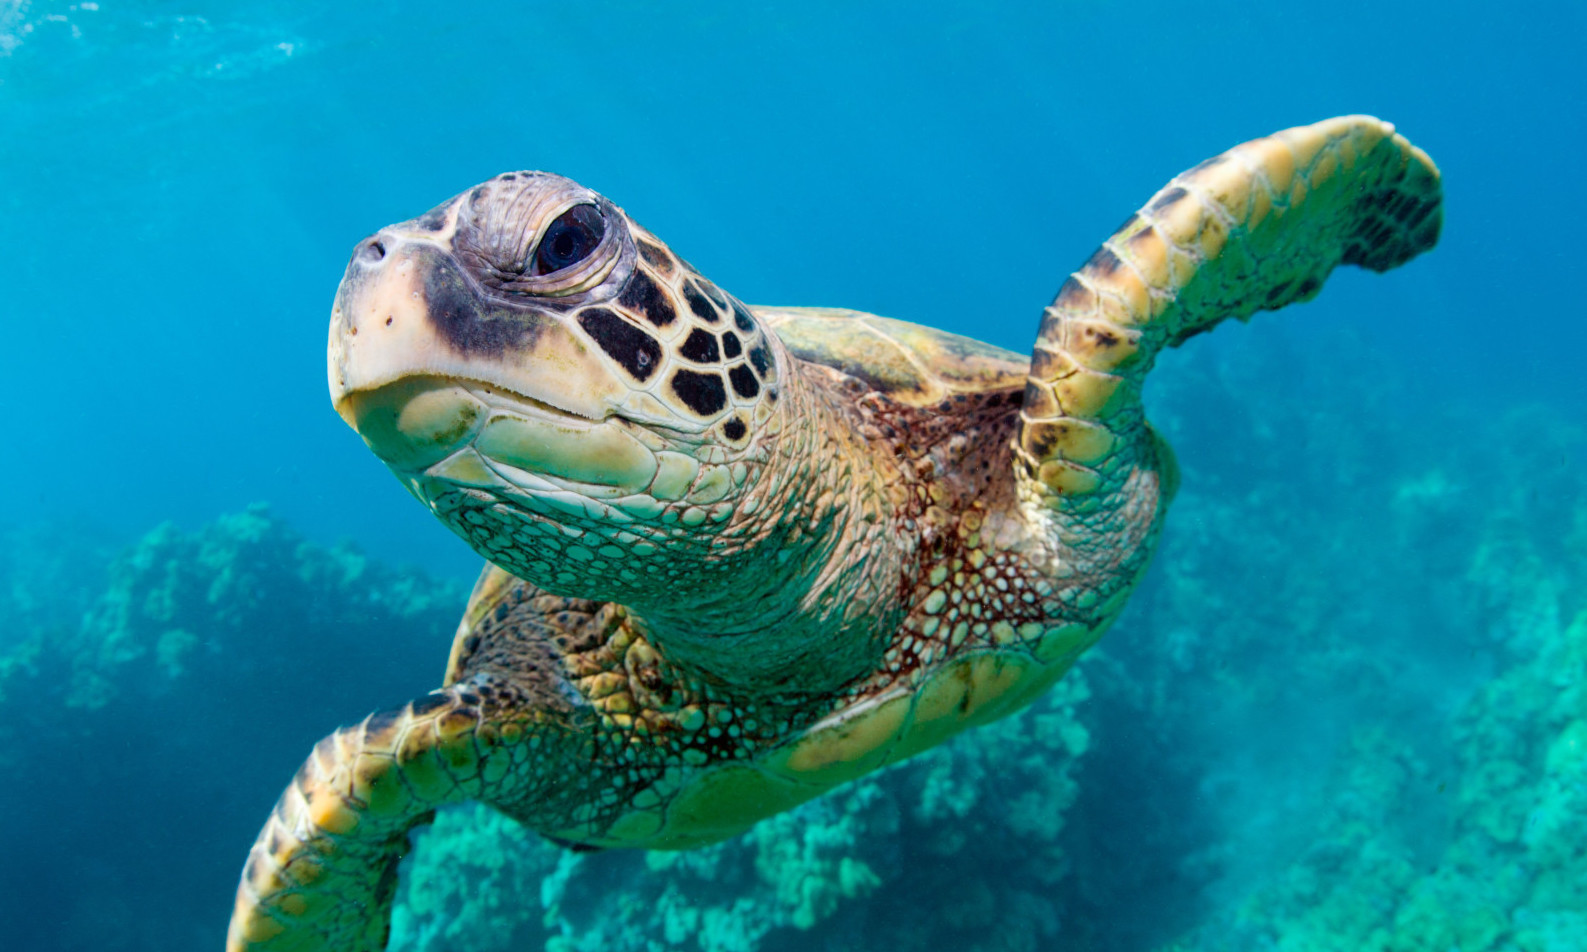 Volunteering with Sea Turtles in South Africa!